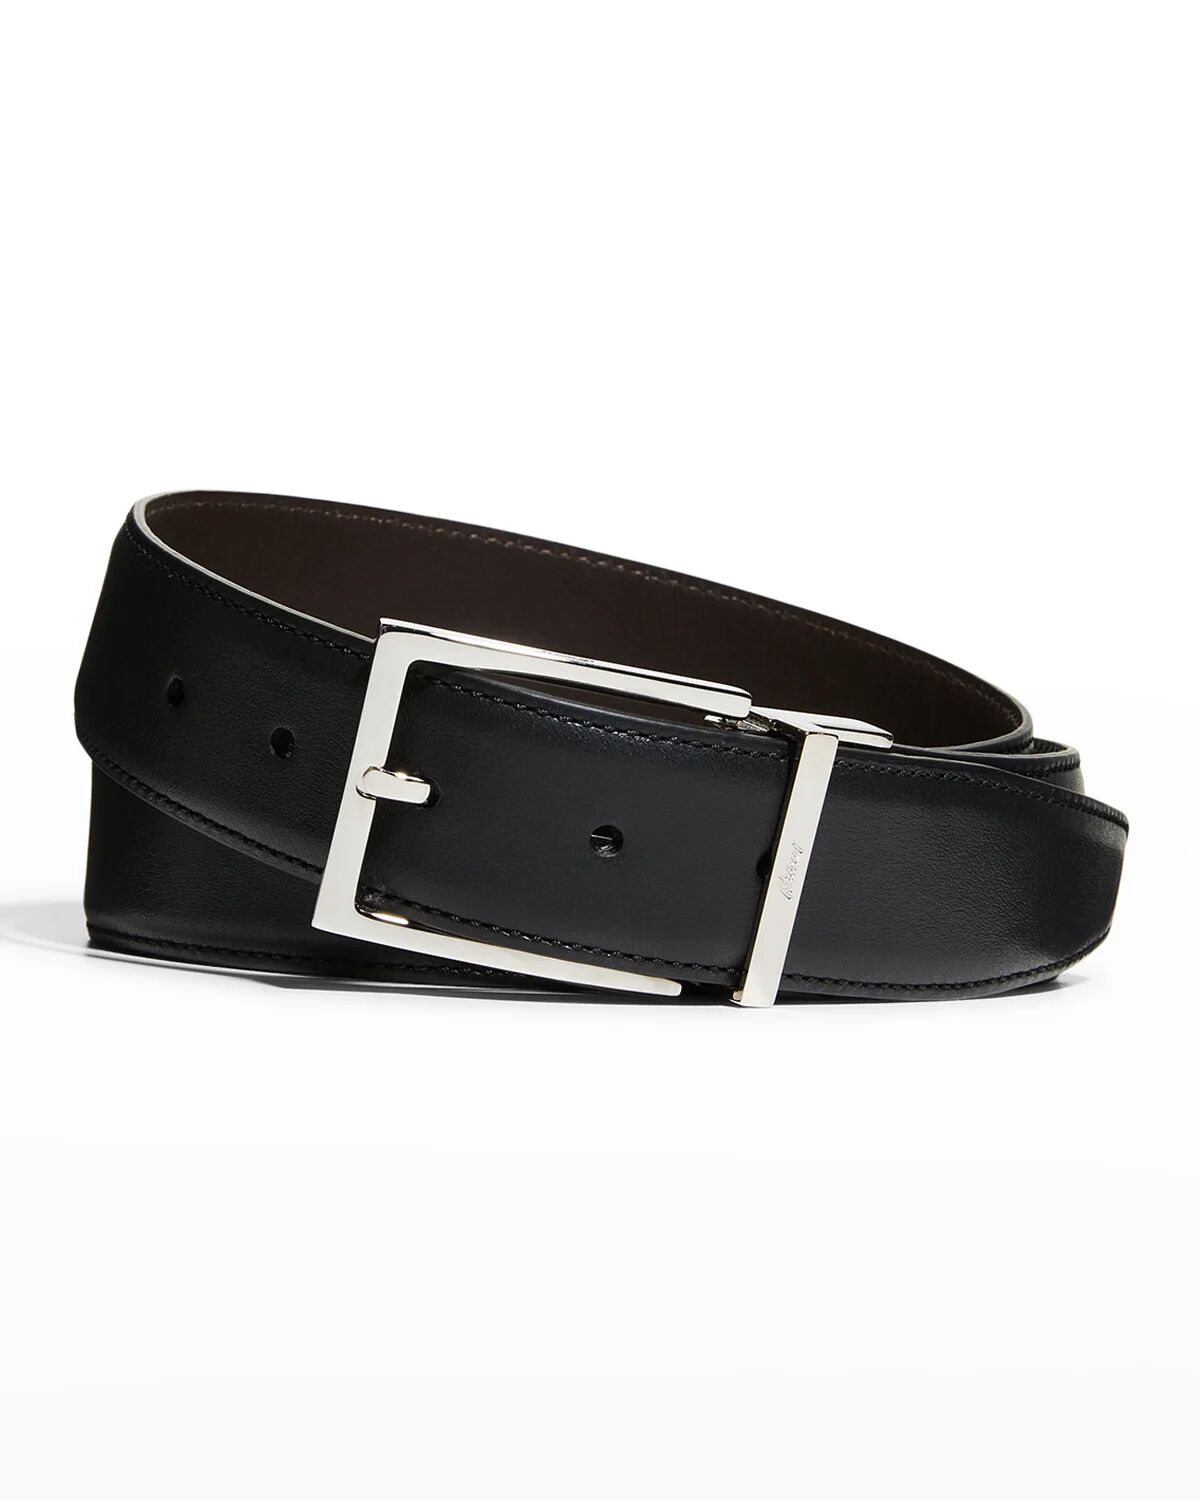 Brioni Men's Reversible Leather Buckle Belt - Size: 44in / 110cm - BLACKDARK BROWN